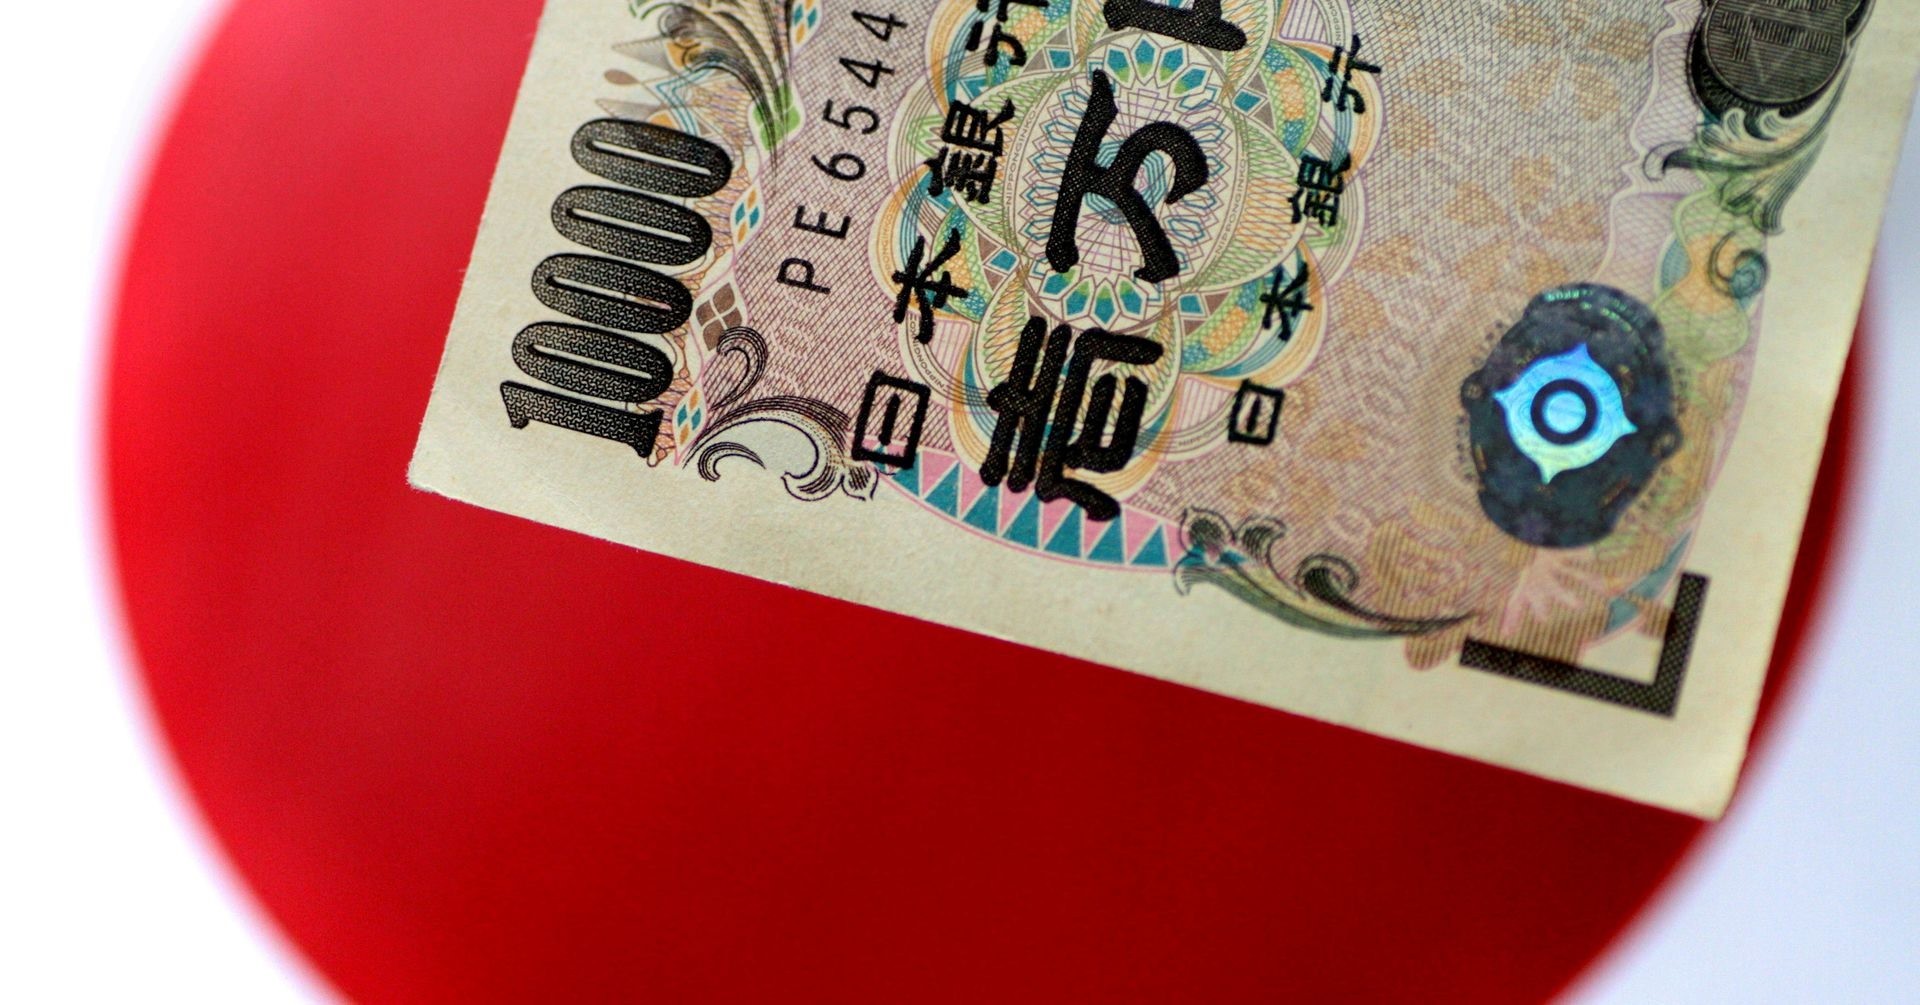 Japan c.bank will seek digital yen with ‘simple’ design, says BOJ official